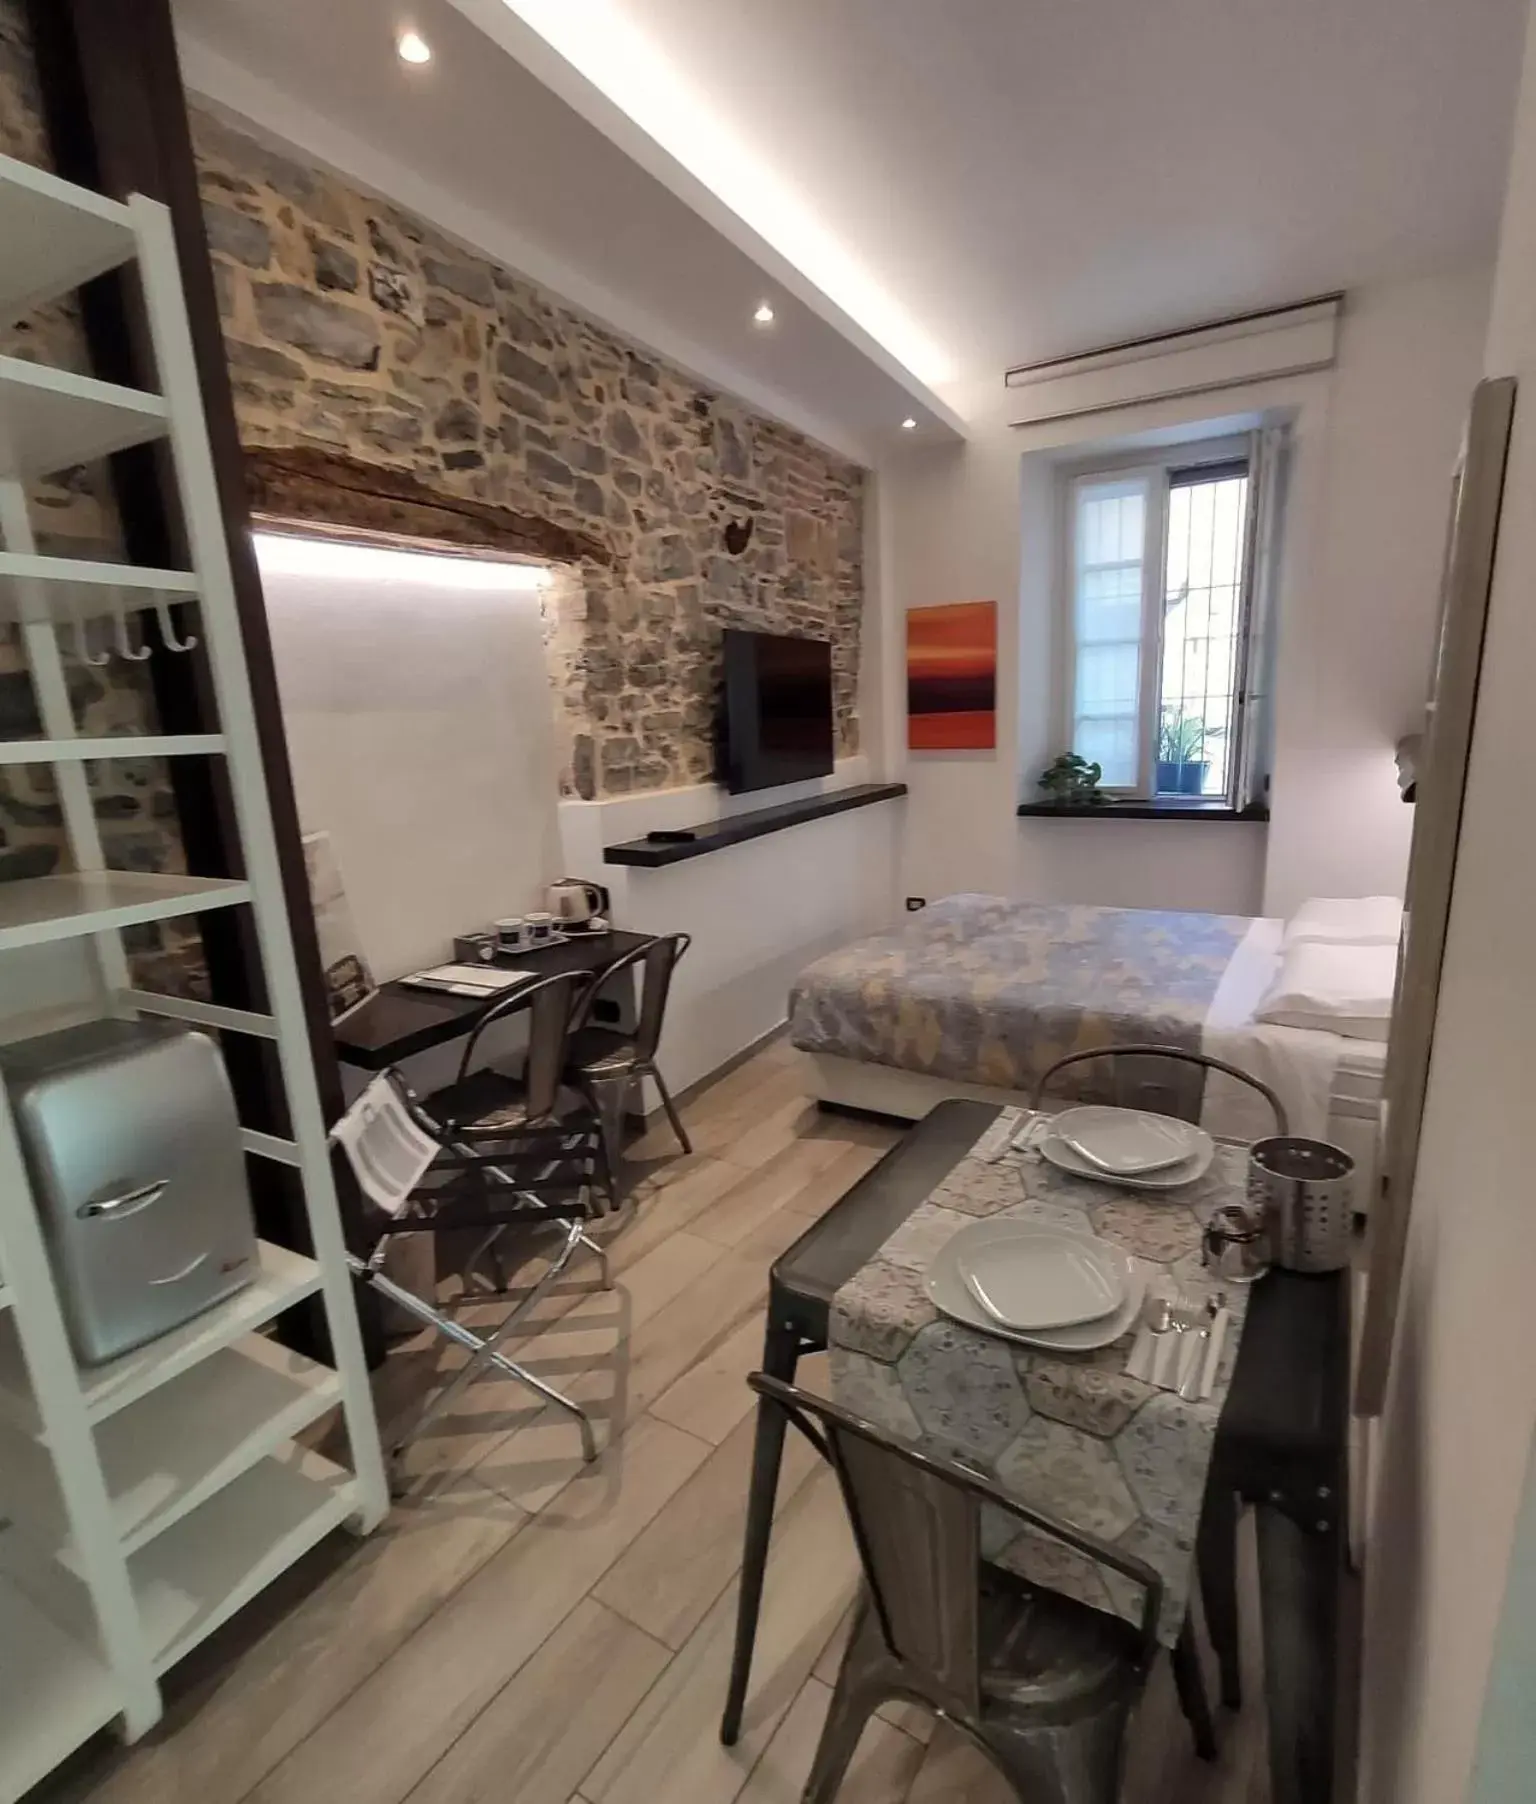 Bedroom, Dining Area in Civico29 Rooms & Breakfast